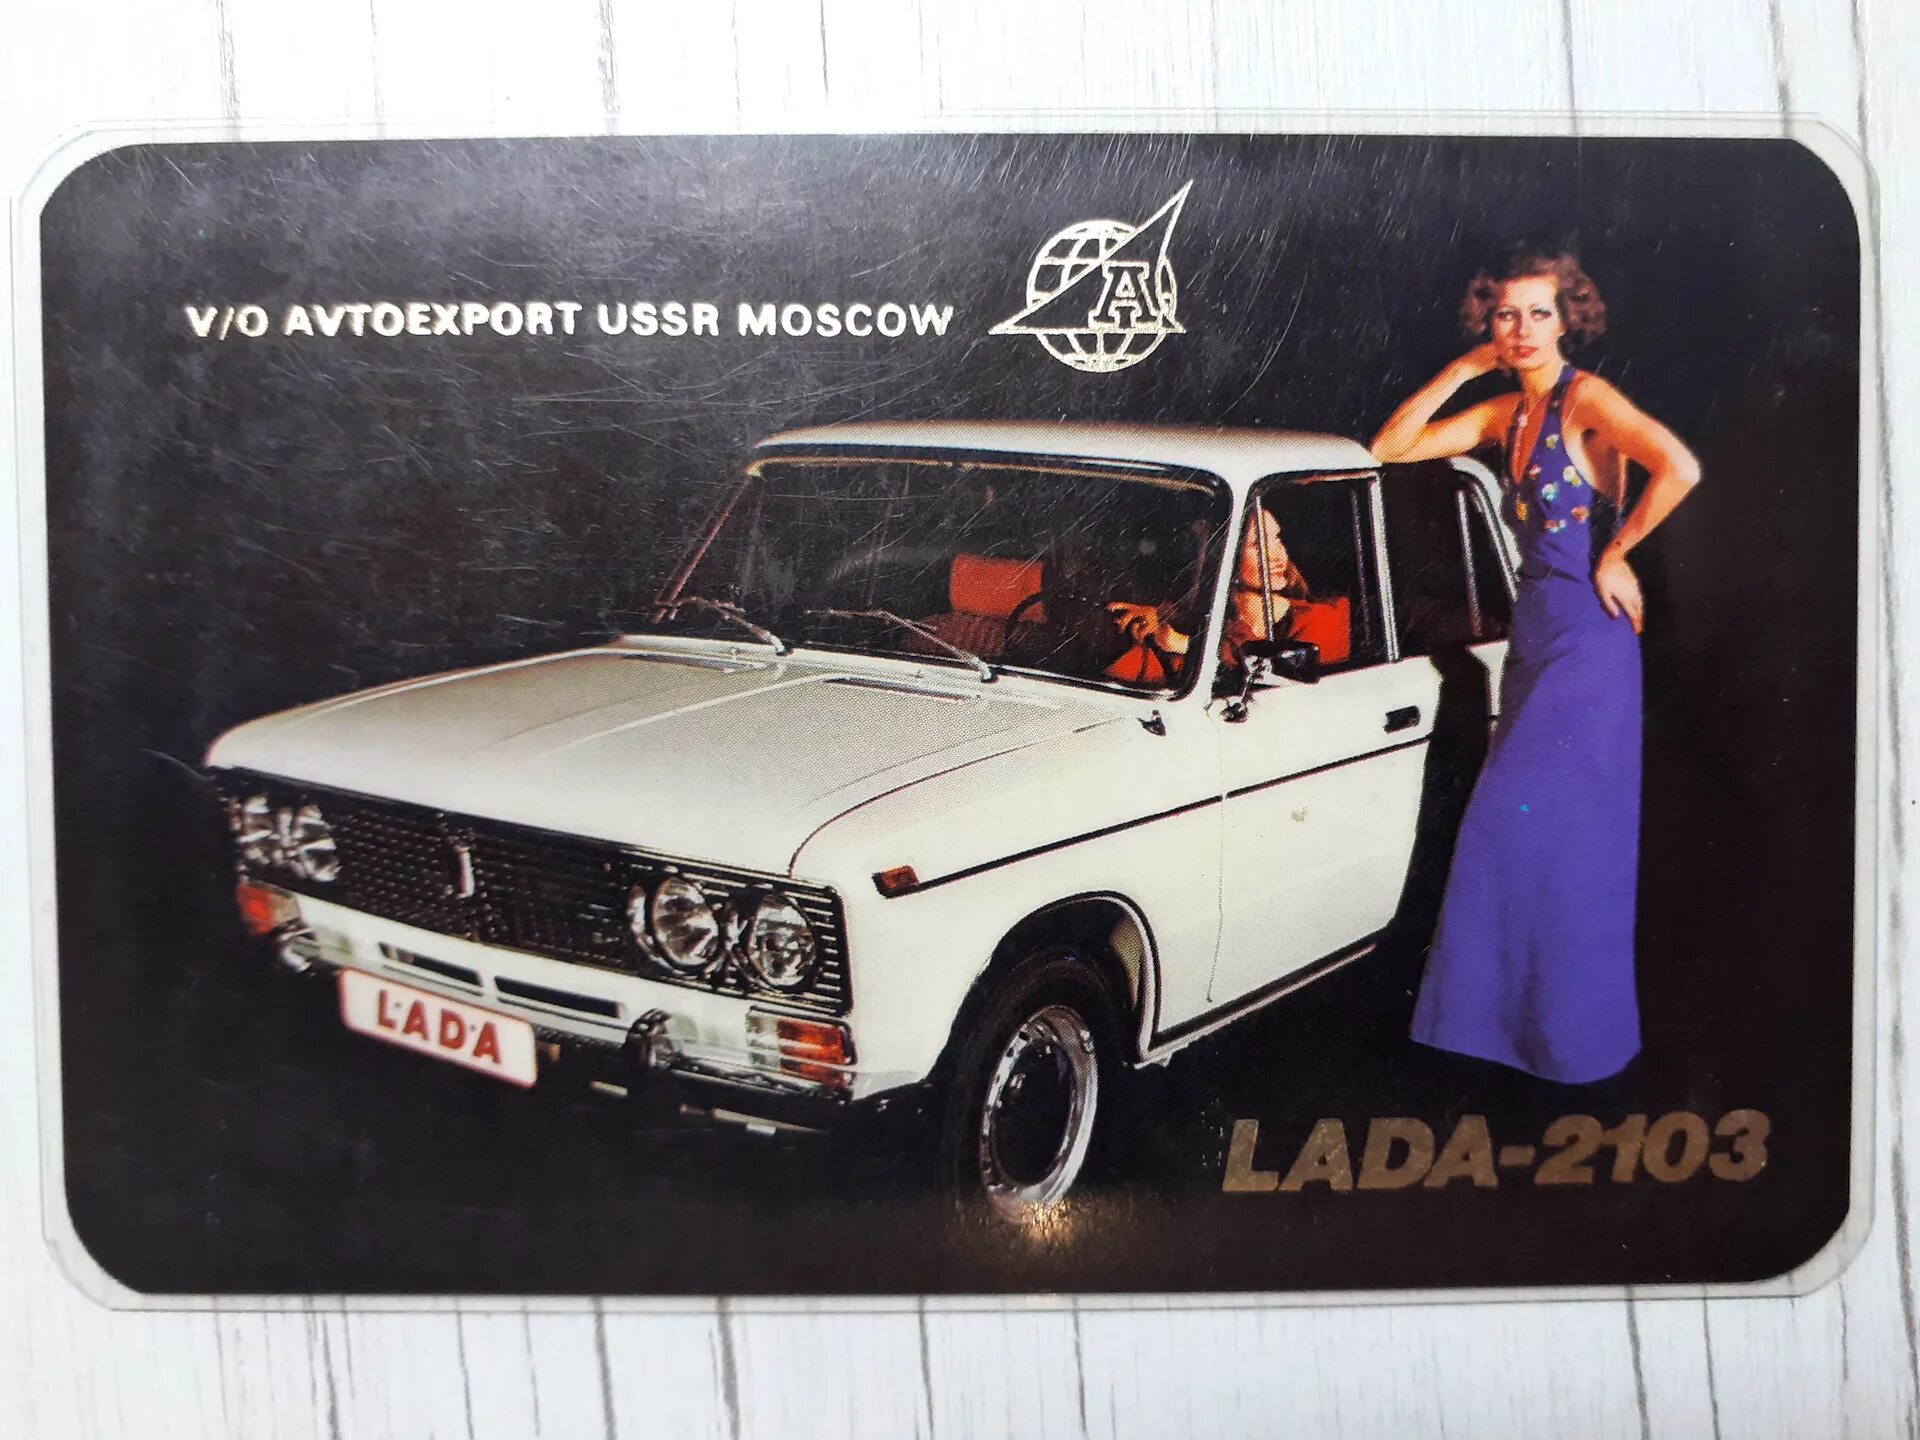 Автоэкспорт. ВАЗ 2103 Автоэкспорт. Книга ВАЗ 2103 2106 Автоэкспорт. Автоэкспорт плакат. Автоэкспорт СССР плакаты.